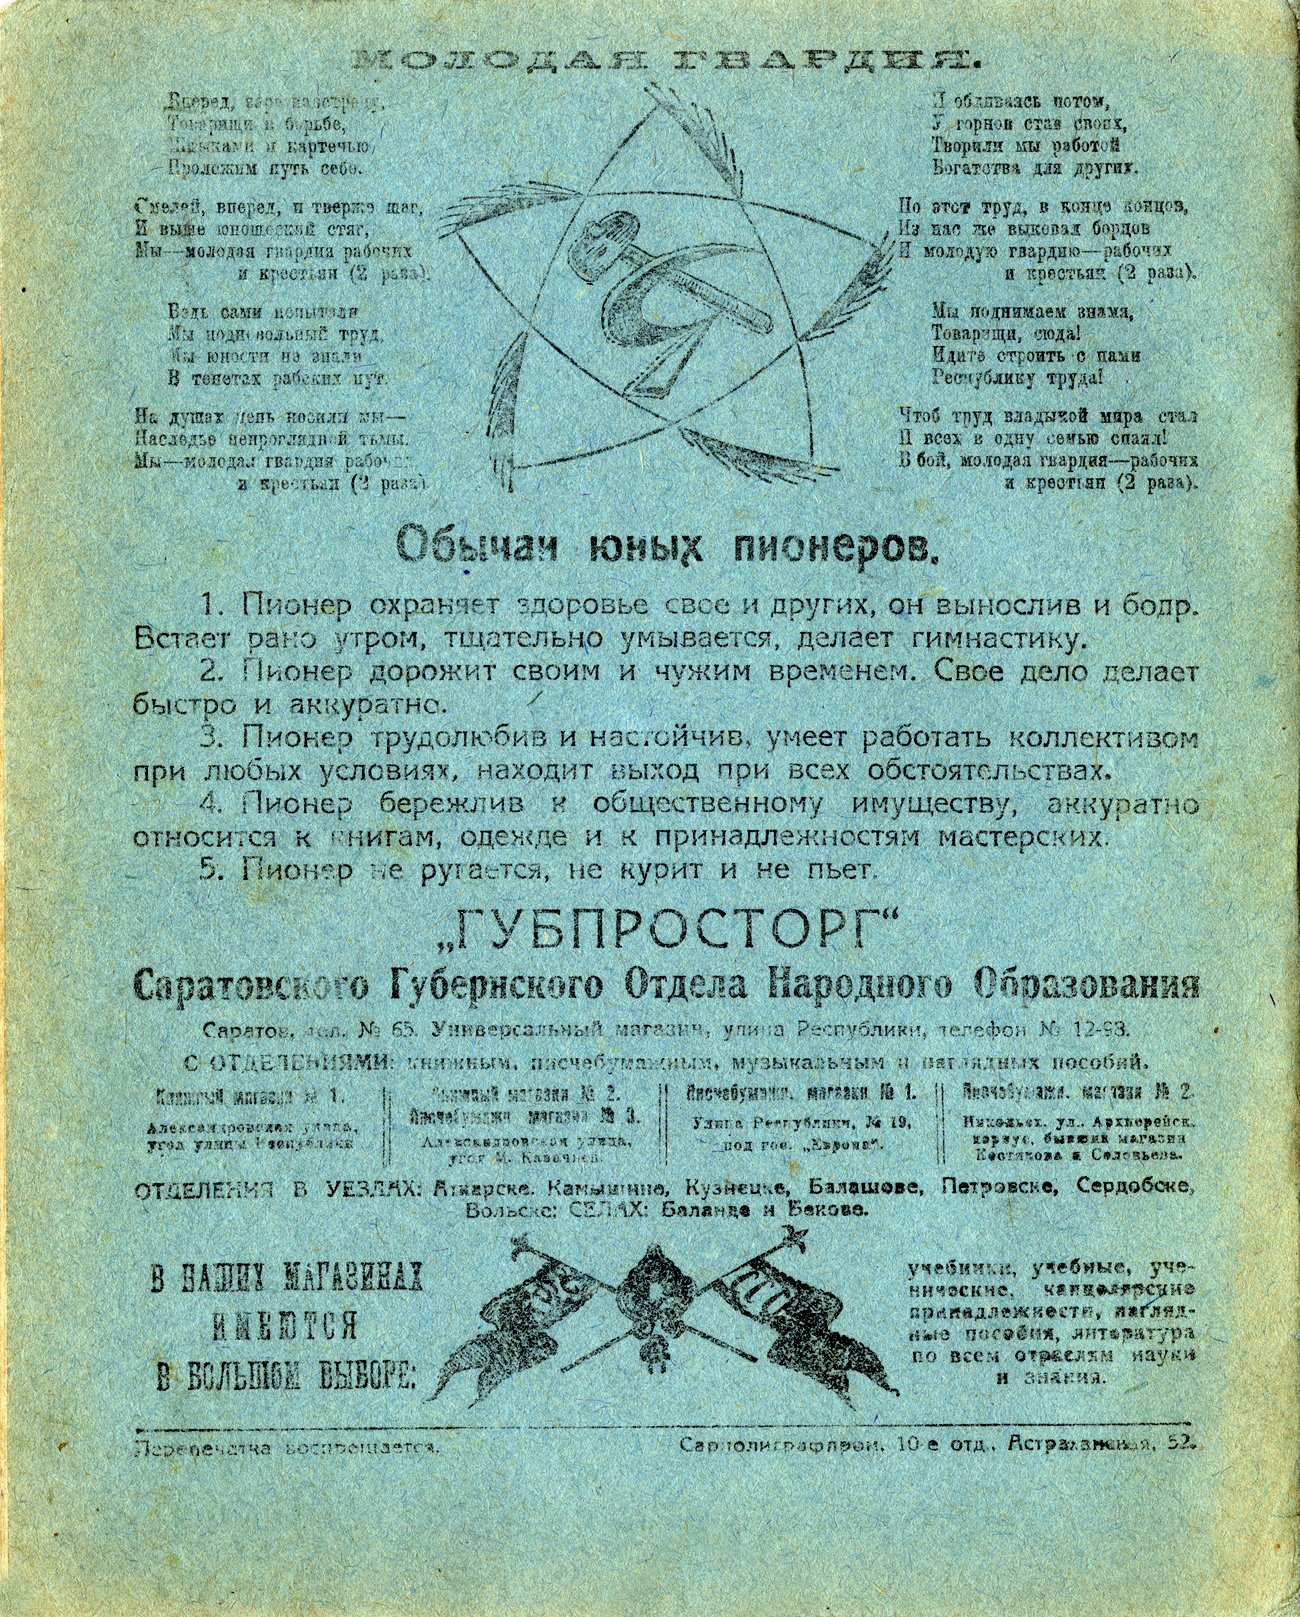 Тетрадь Губпросторг, 1928, оборот